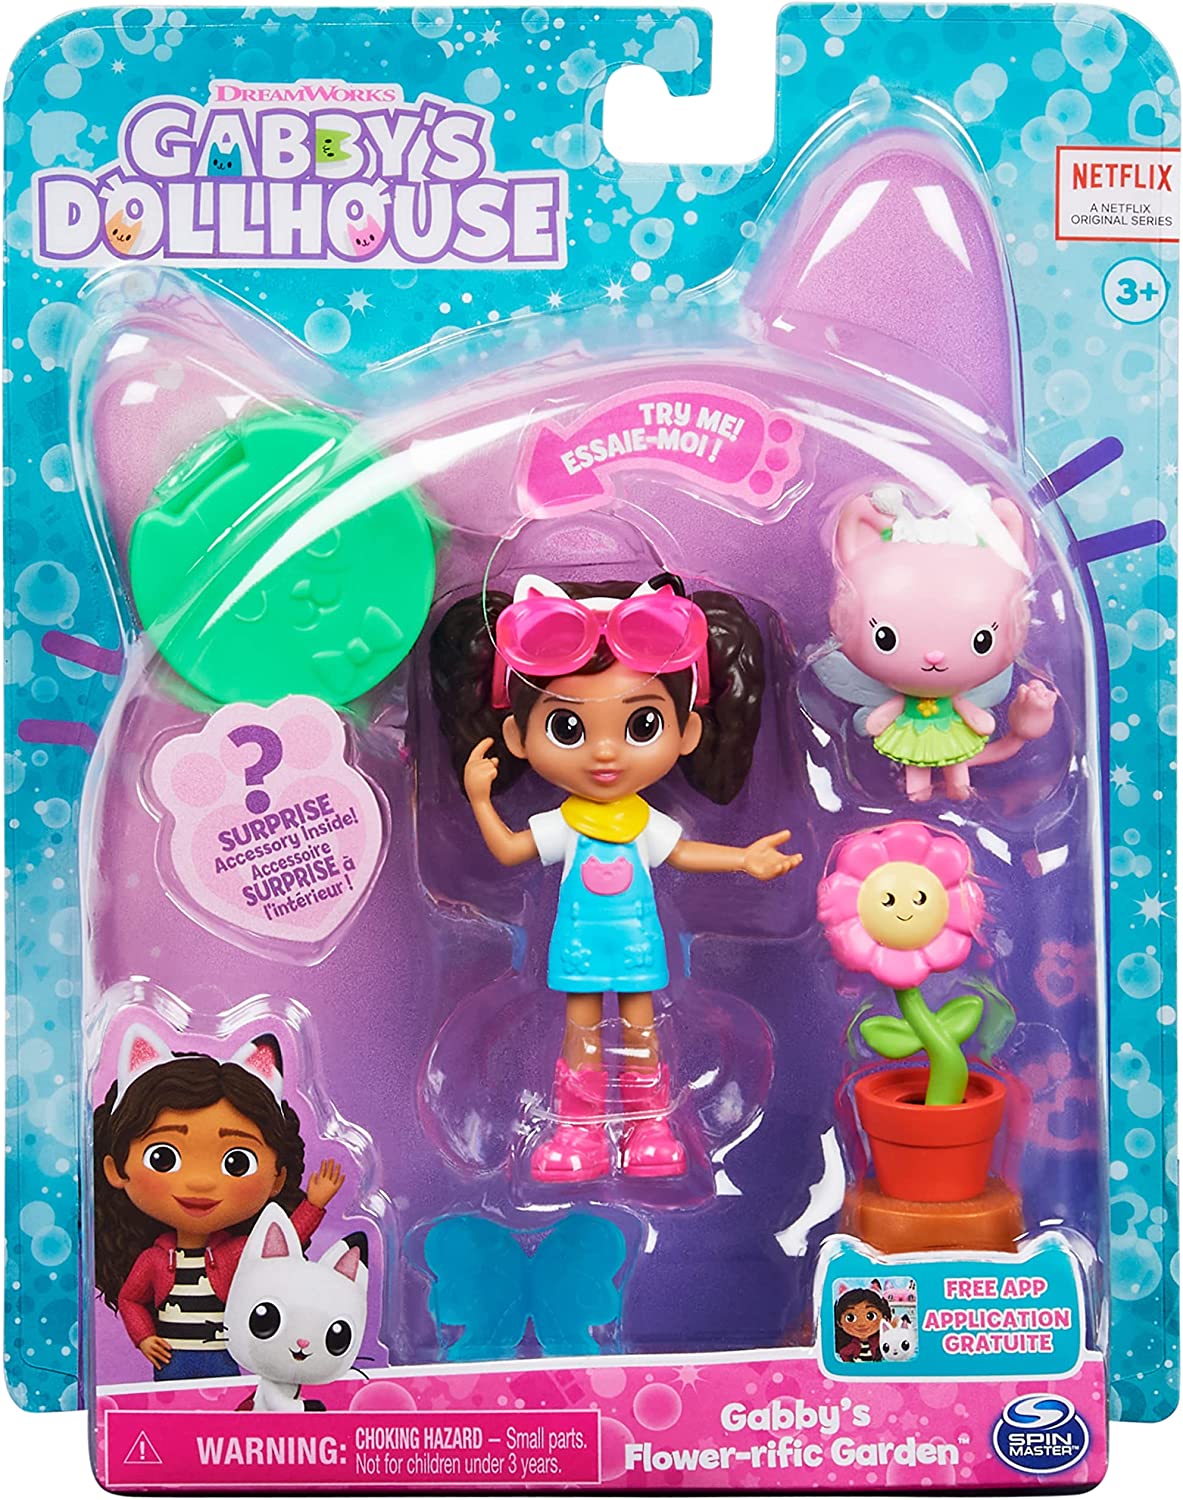 Gabby's Dollhouse - Set de figuras Deluxe, Miscellaneous